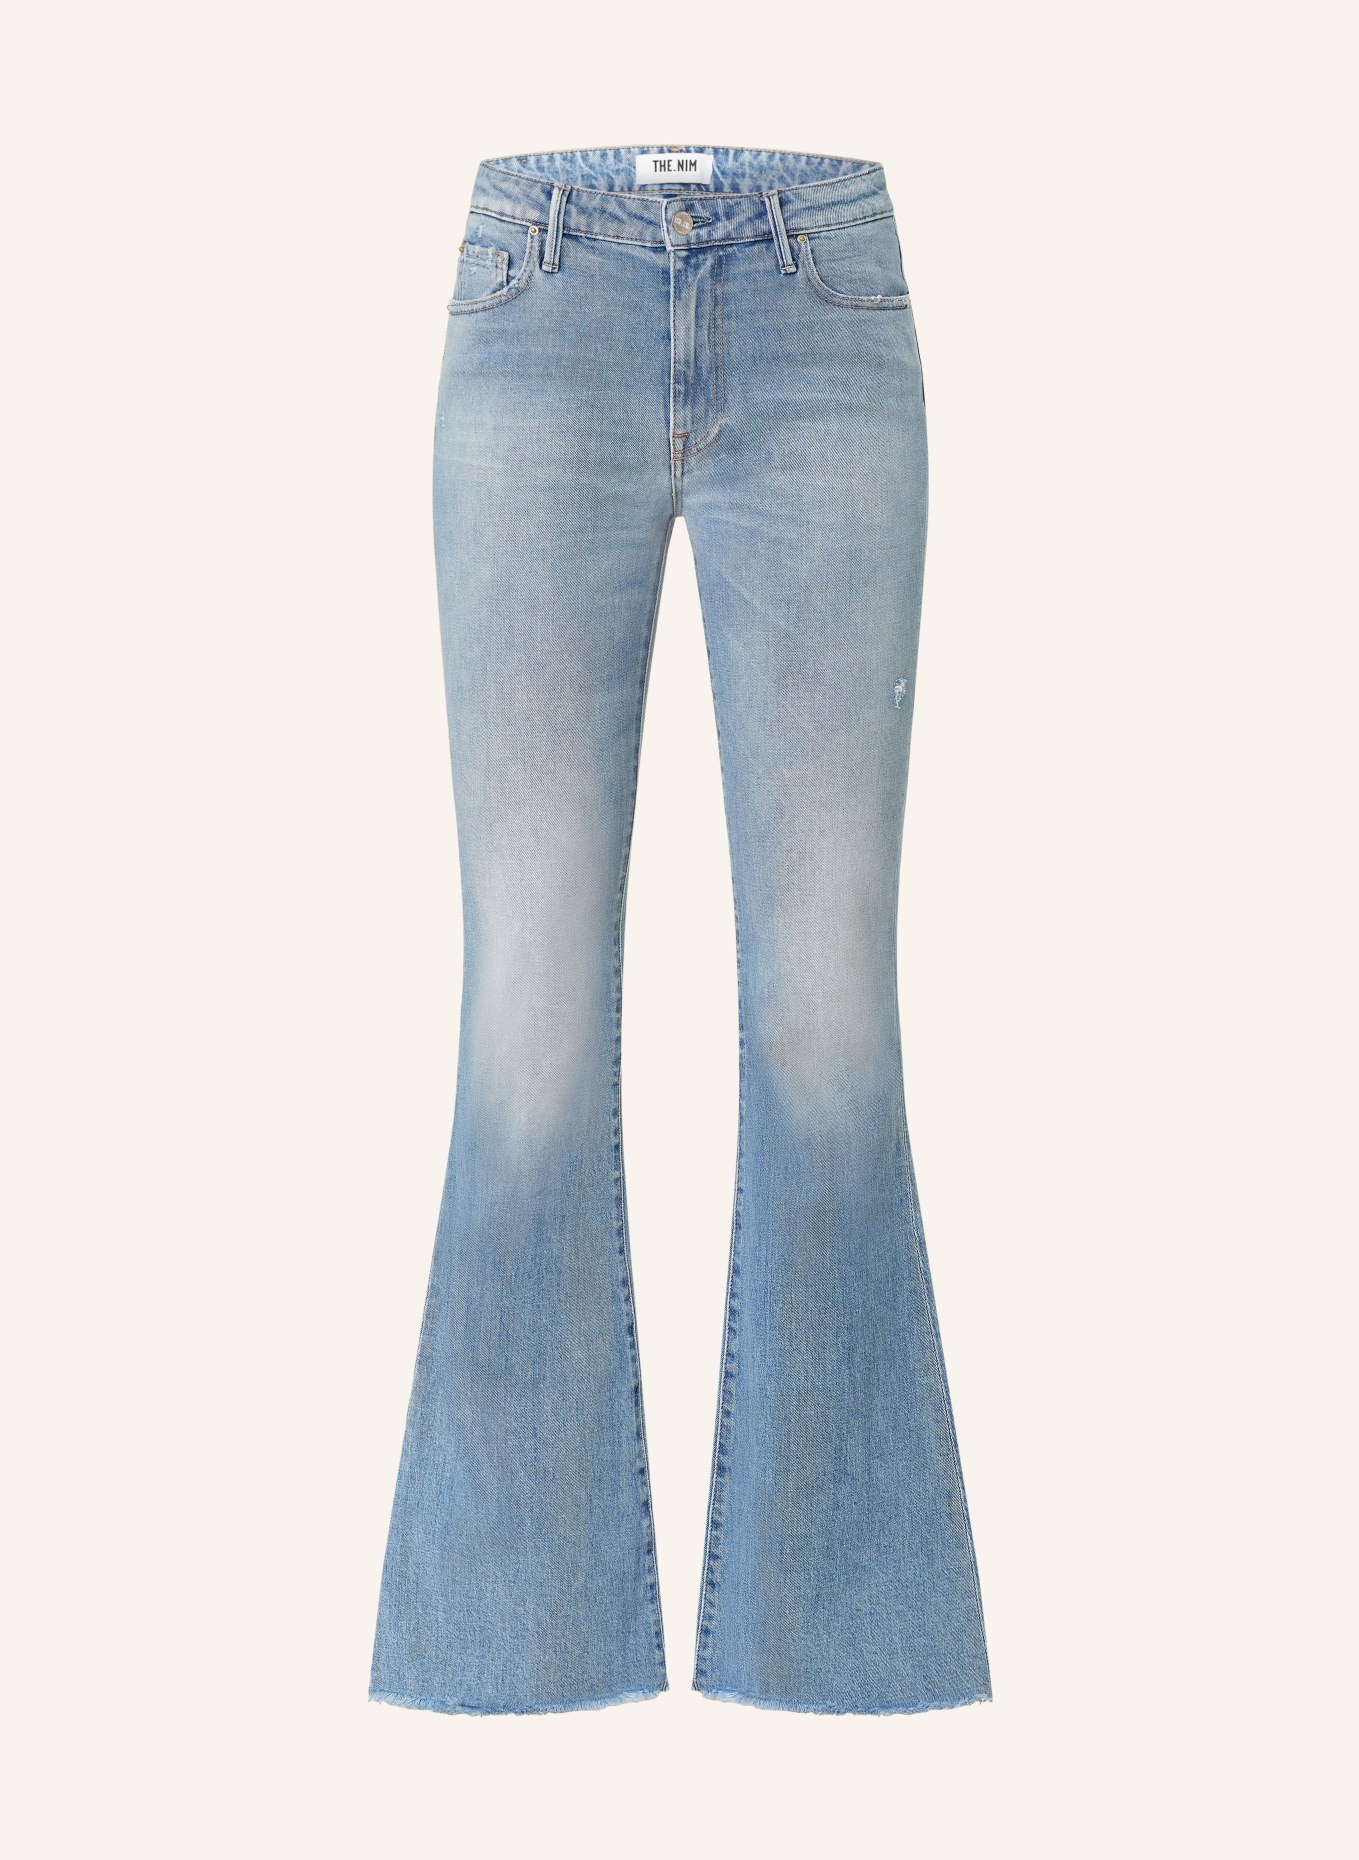 THE.NIM STANDARD Flared Jeans KYLIE, Farbe: W837-VLG LIGHT BLUE (Bild 1)